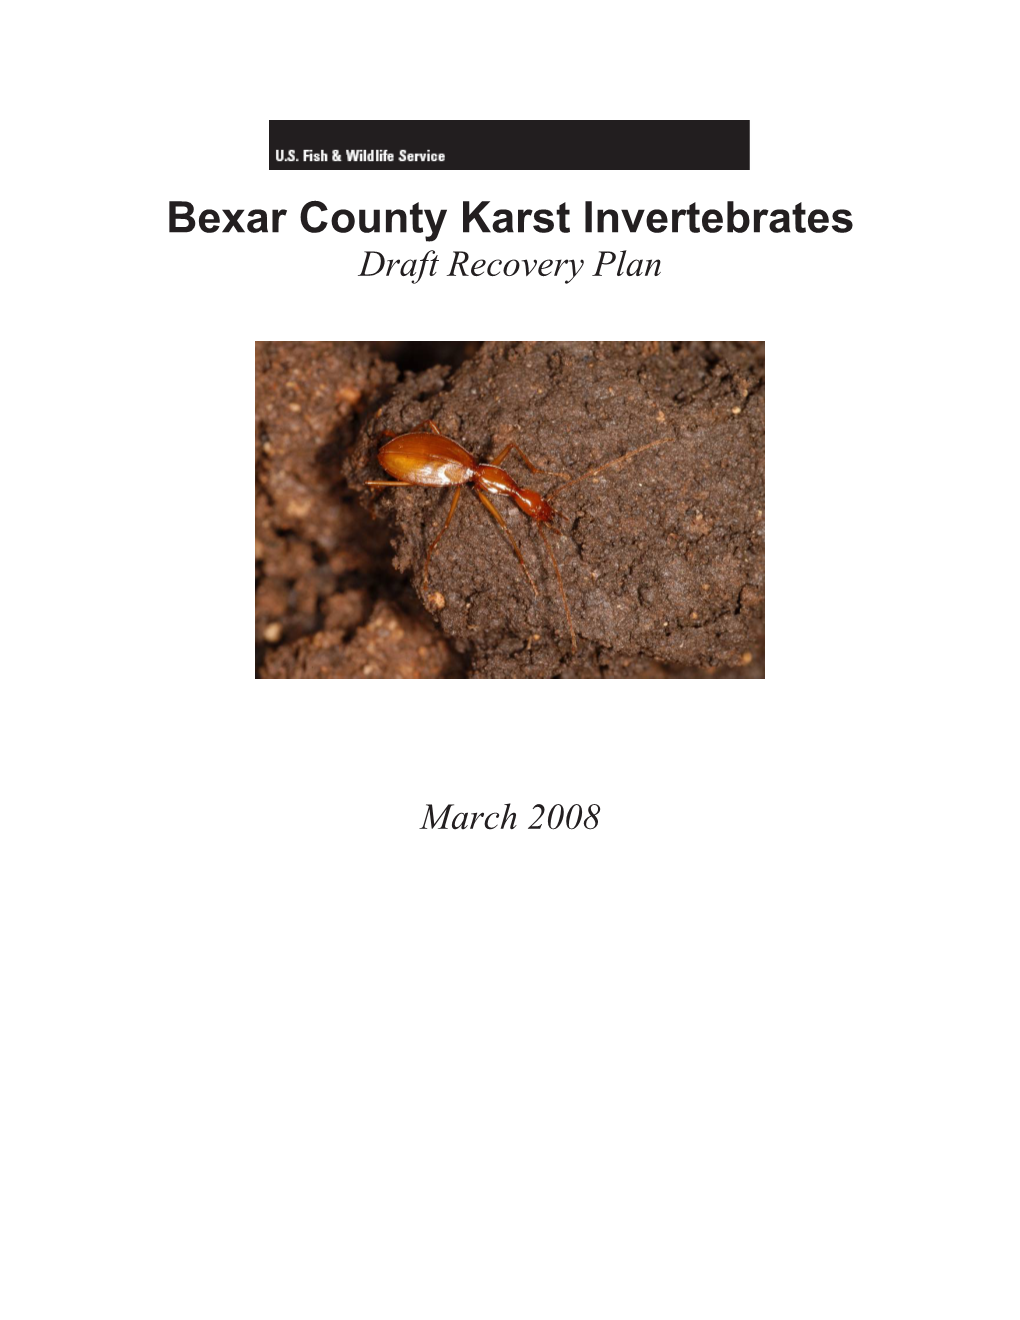 Bexar County Karst Invertebrates Draft Recovery Plan